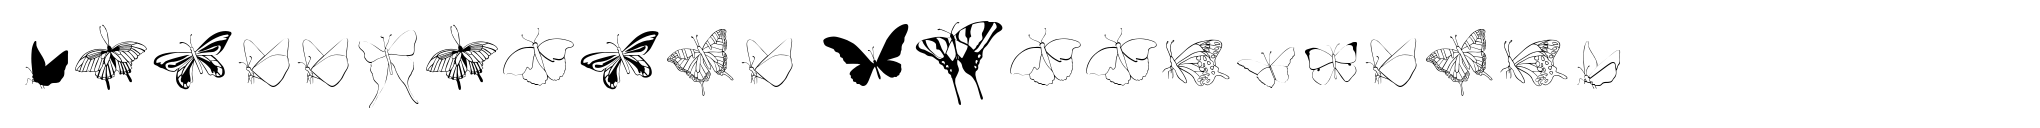 Swallowtail Butterflies image